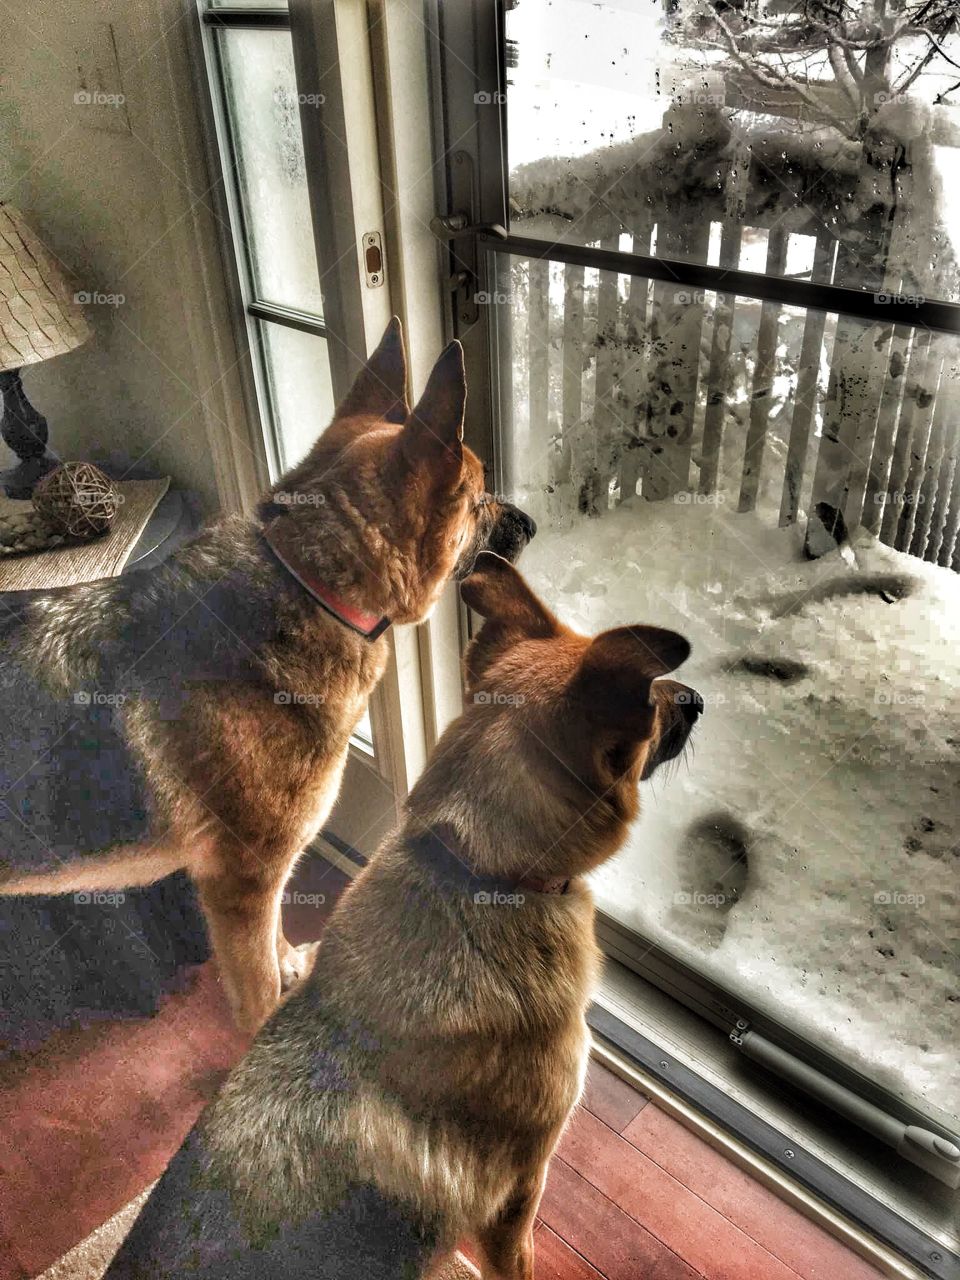 Doggy snow day!